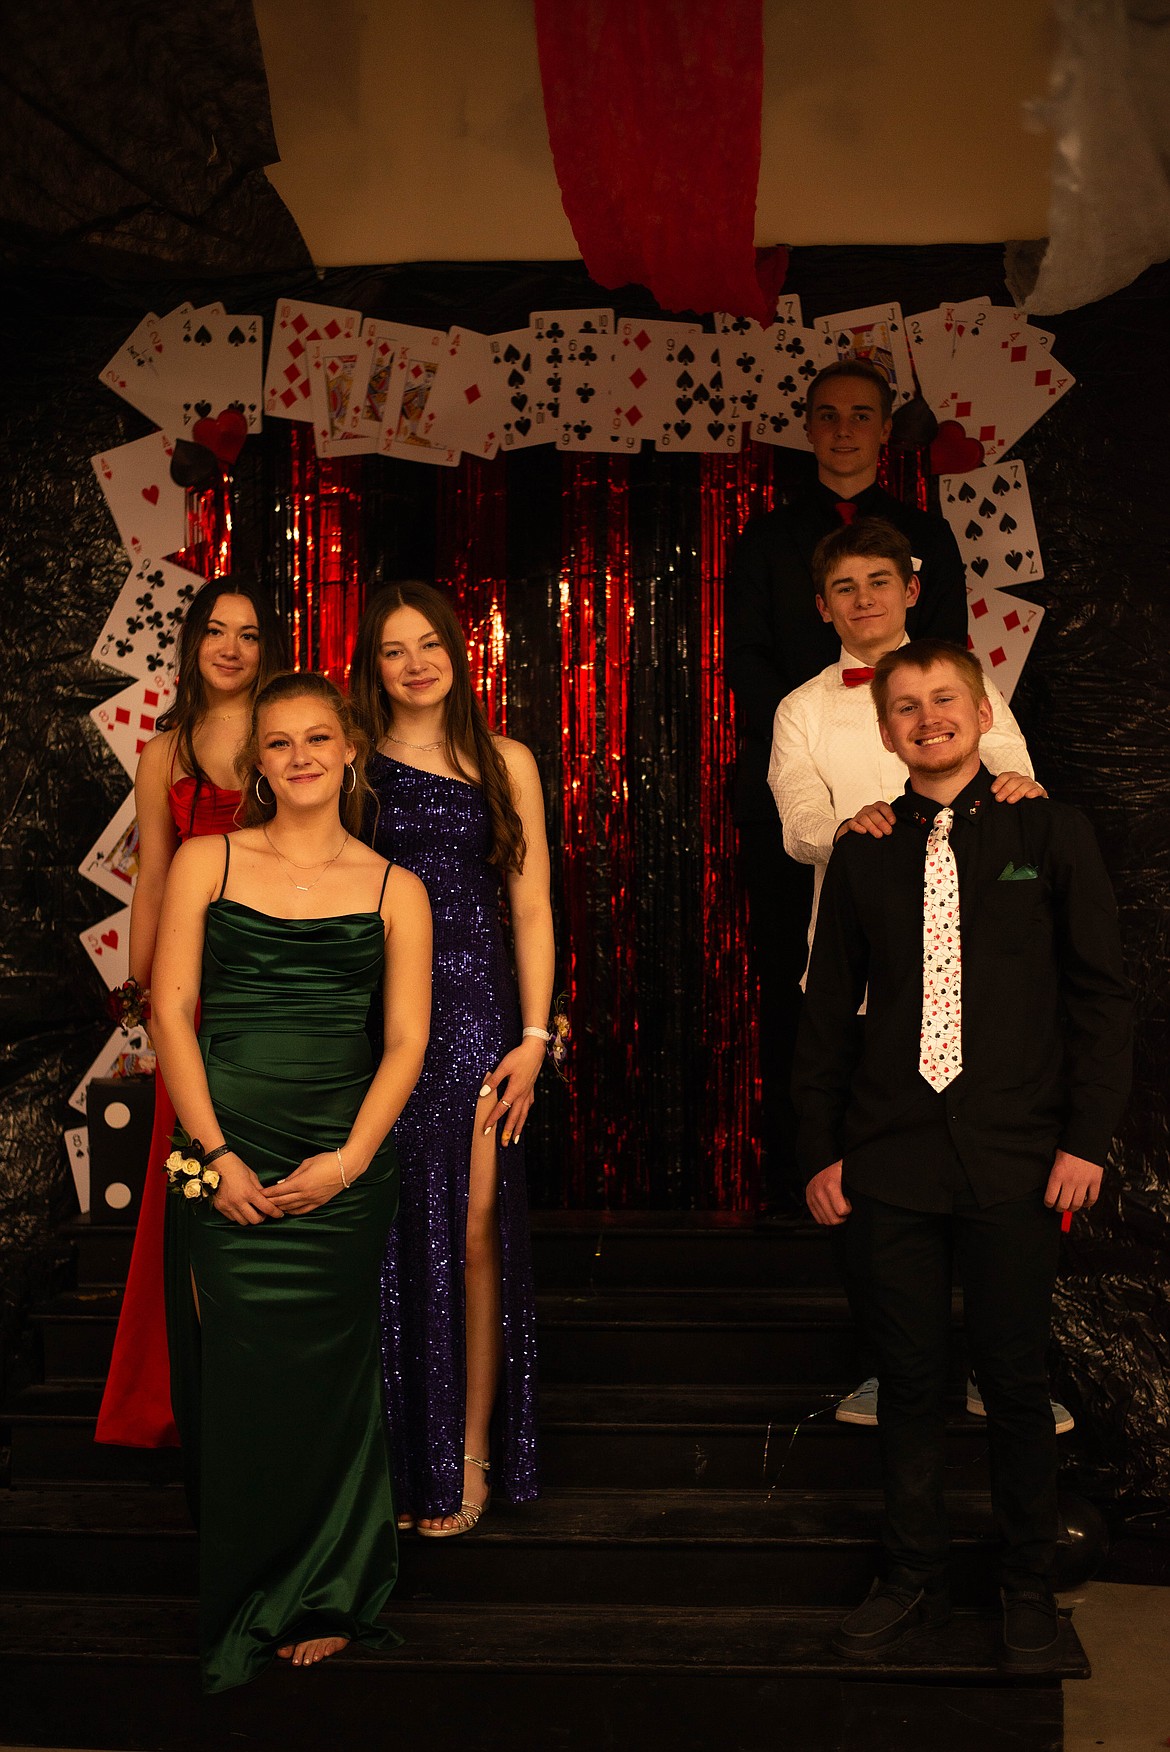 Superior High School prom king and queen candidates Jason Merrill, Micah Acker, Owen Doyle, Abby Wheeler, Eddye Betts and Braelynn Mangold. (Tamara Durovey photo)